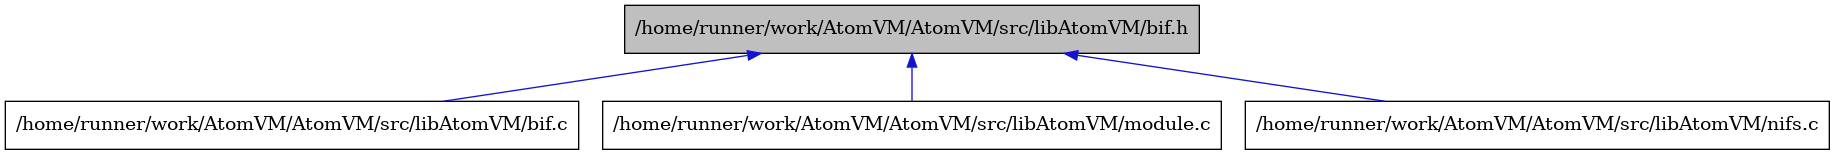 digraph {
    graph [bgcolor="#00000000"]
    node [shape=rectangle style=filled fillcolor="#FFFFFF" font=Helvetica padding=2]
    edge [color="#1414CE"]
    "2" [label="/home/runner/work/AtomVM/AtomVM/src/libAtomVM/bif.c" tooltip="/home/runner/work/AtomVM/AtomVM/src/libAtomVM/bif.c"]
    "1" [label="/home/runner/work/AtomVM/AtomVM/src/libAtomVM/bif.h" tooltip="/home/runner/work/AtomVM/AtomVM/src/libAtomVM/bif.h" fillcolor="#BFBFBF"]
    "3" [label="/home/runner/work/AtomVM/AtomVM/src/libAtomVM/module.c" tooltip="/home/runner/work/AtomVM/AtomVM/src/libAtomVM/module.c"]
    "4" [label="/home/runner/work/AtomVM/AtomVM/src/libAtomVM/nifs.c" tooltip="/home/runner/work/AtomVM/AtomVM/src/libAtomVM/nifs.c"]
    "1" -> "2" [dir=back tooltip="include"]
    "1" -> "3" [dir=back tooltip="include"]
    "1" -> "4" [dir=back tooltip="include"]
}